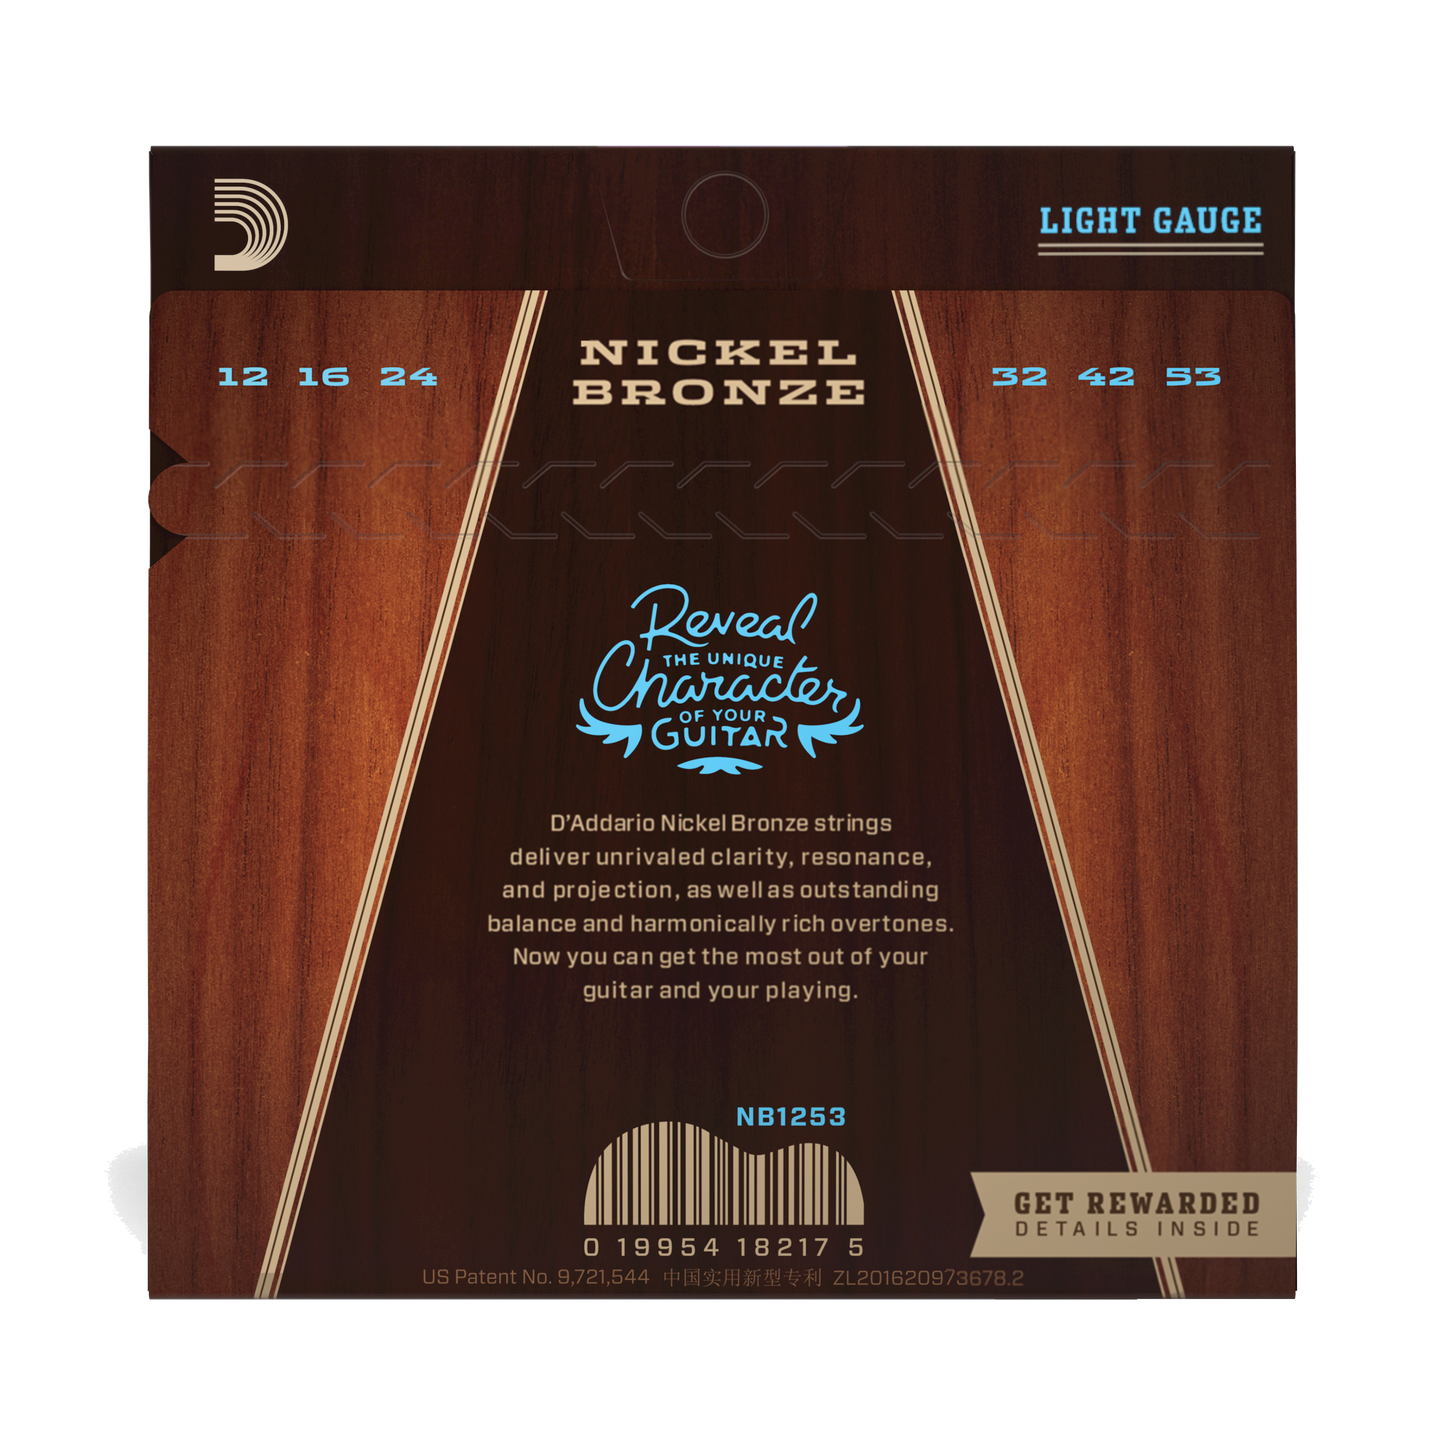 D'Addario NB1253-3P Nickel Bronze Acoustic Guitar Strings, Light, 12-53 (3 SETS)